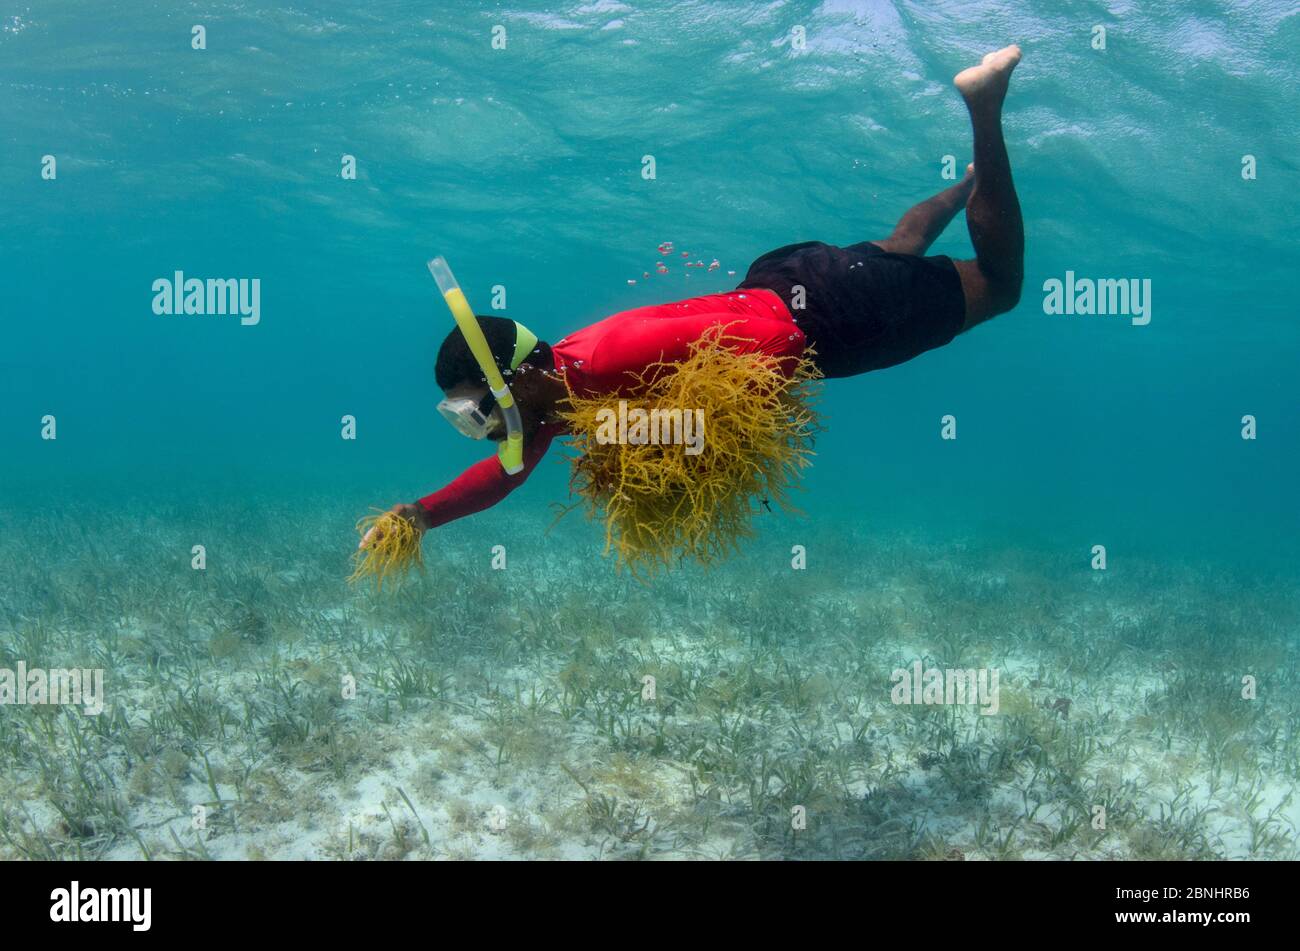 Snorkeller collecting edible algae (Eucheuma sp.) Lighthouse Reef Atoll. Belize.  May 2015. Stock Photo